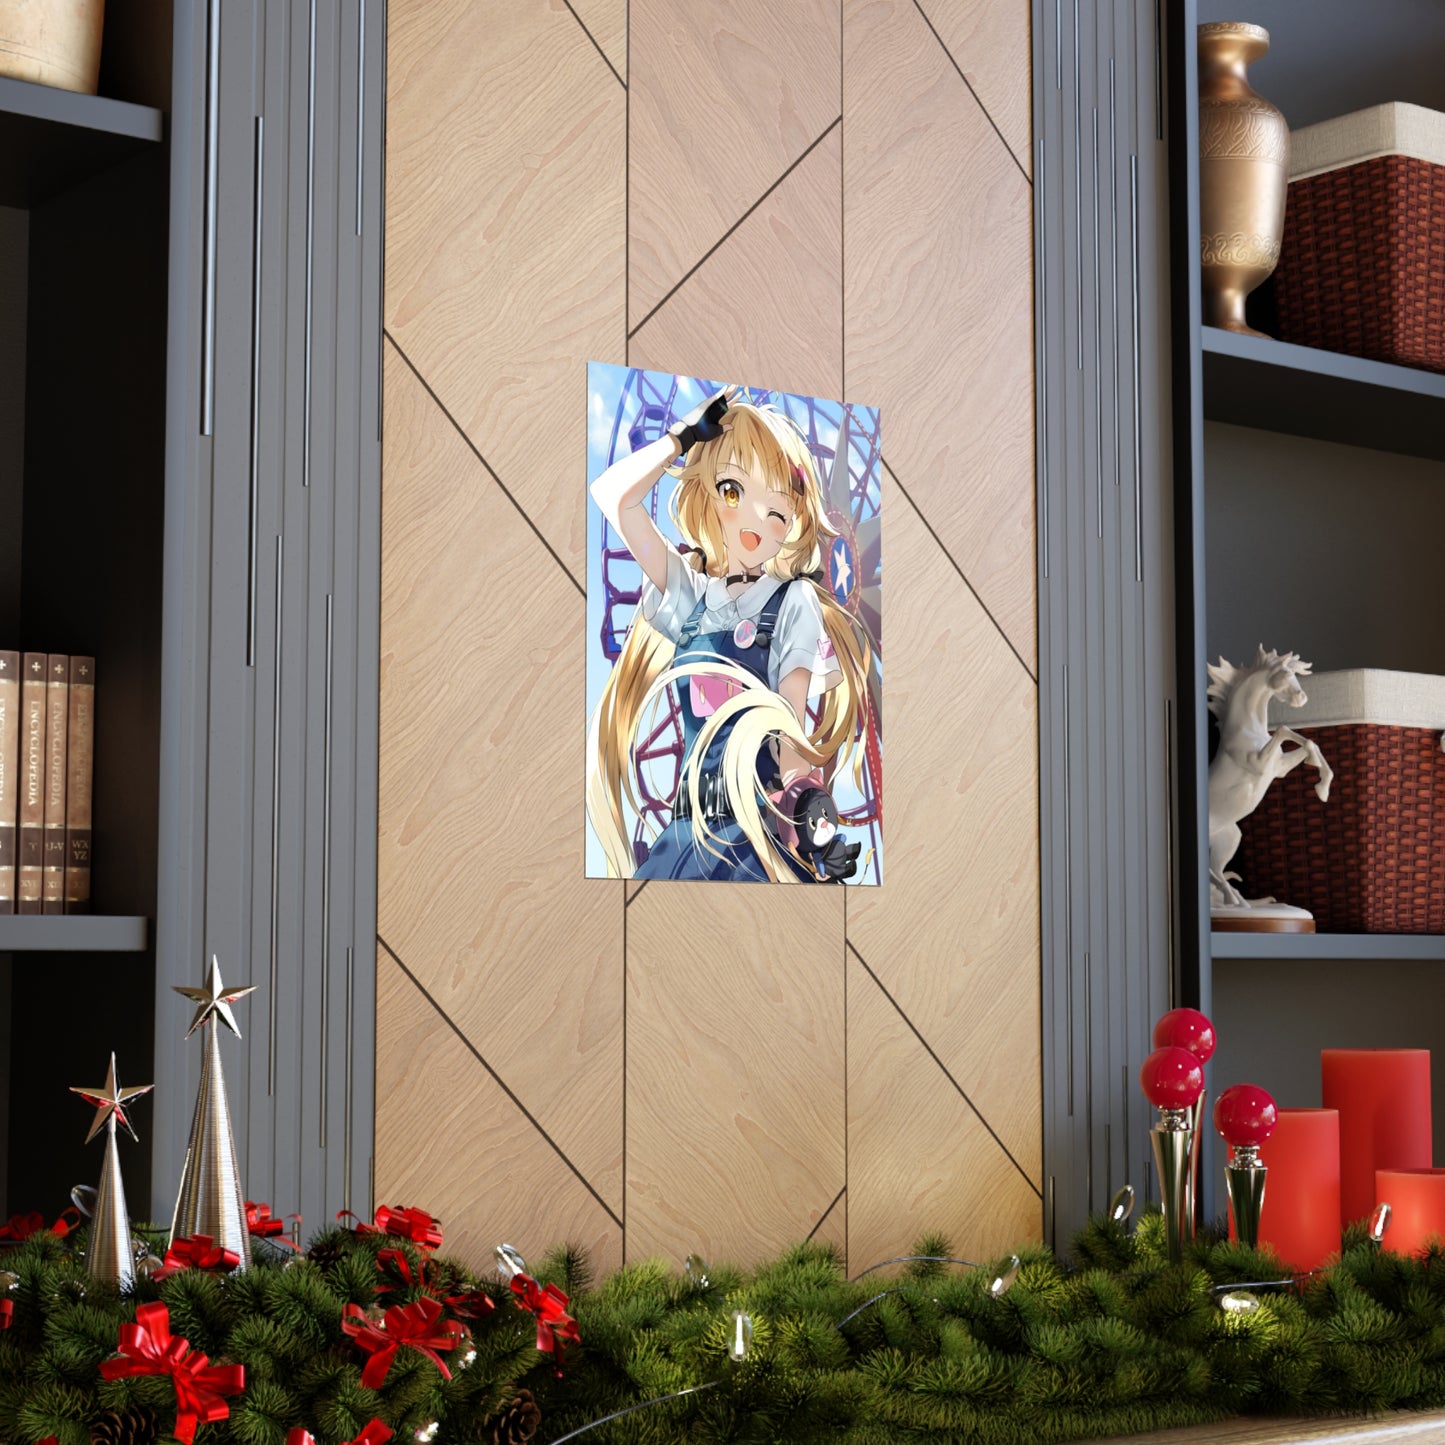 Shirli Tower Of Fantasy Poster - Gaming Decor Wall Art - Premium Matte Vertical Poster